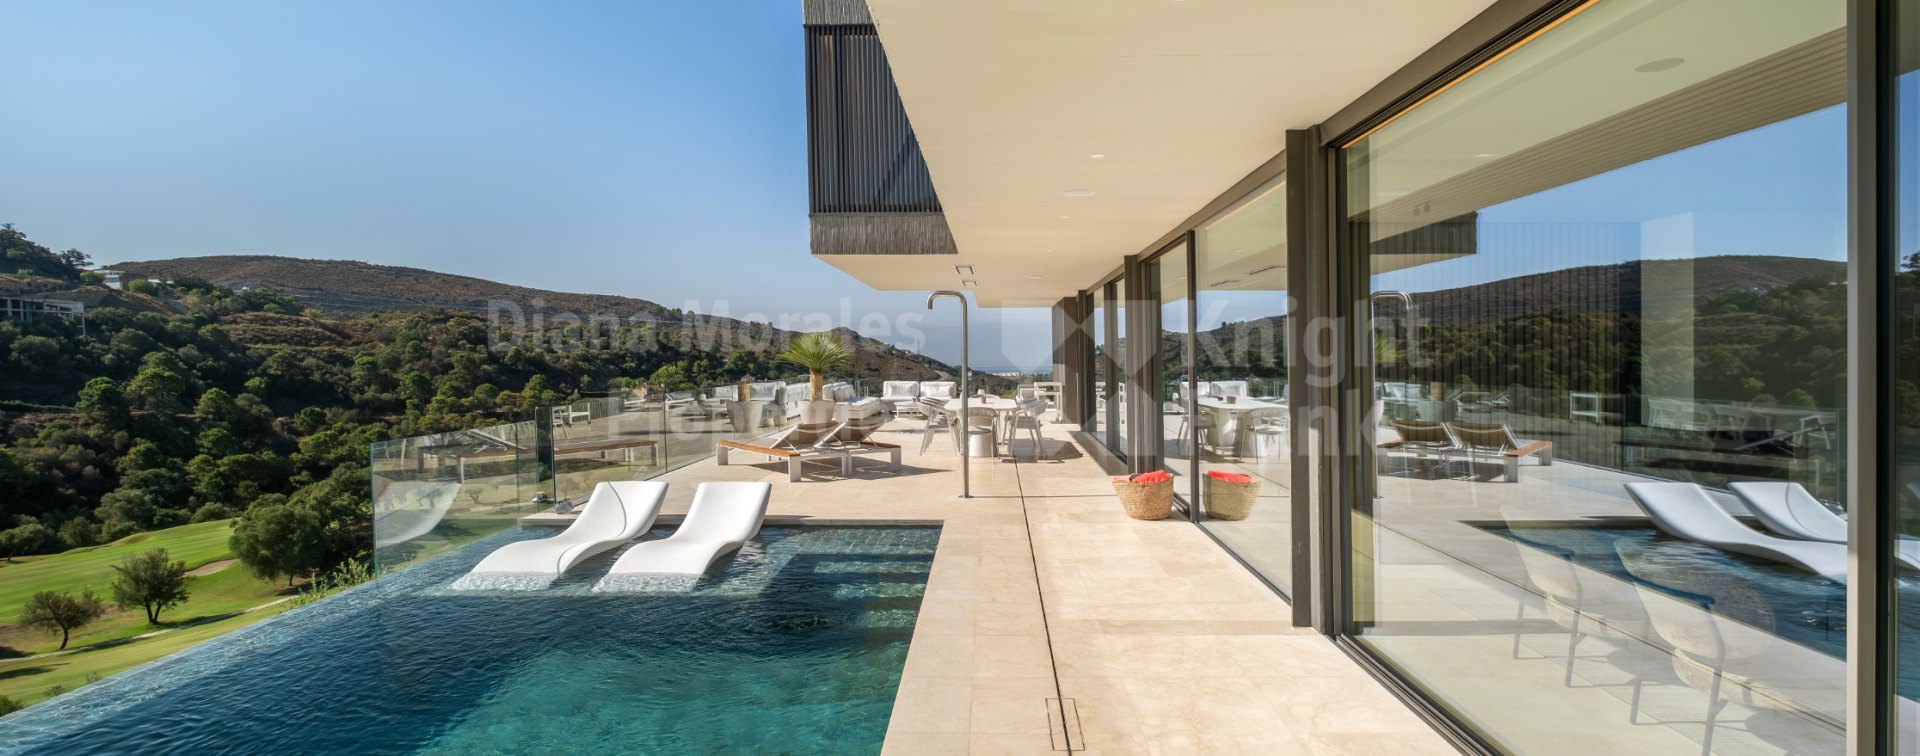 Marbella Club Golf Resort, Designer villa in gated community with security